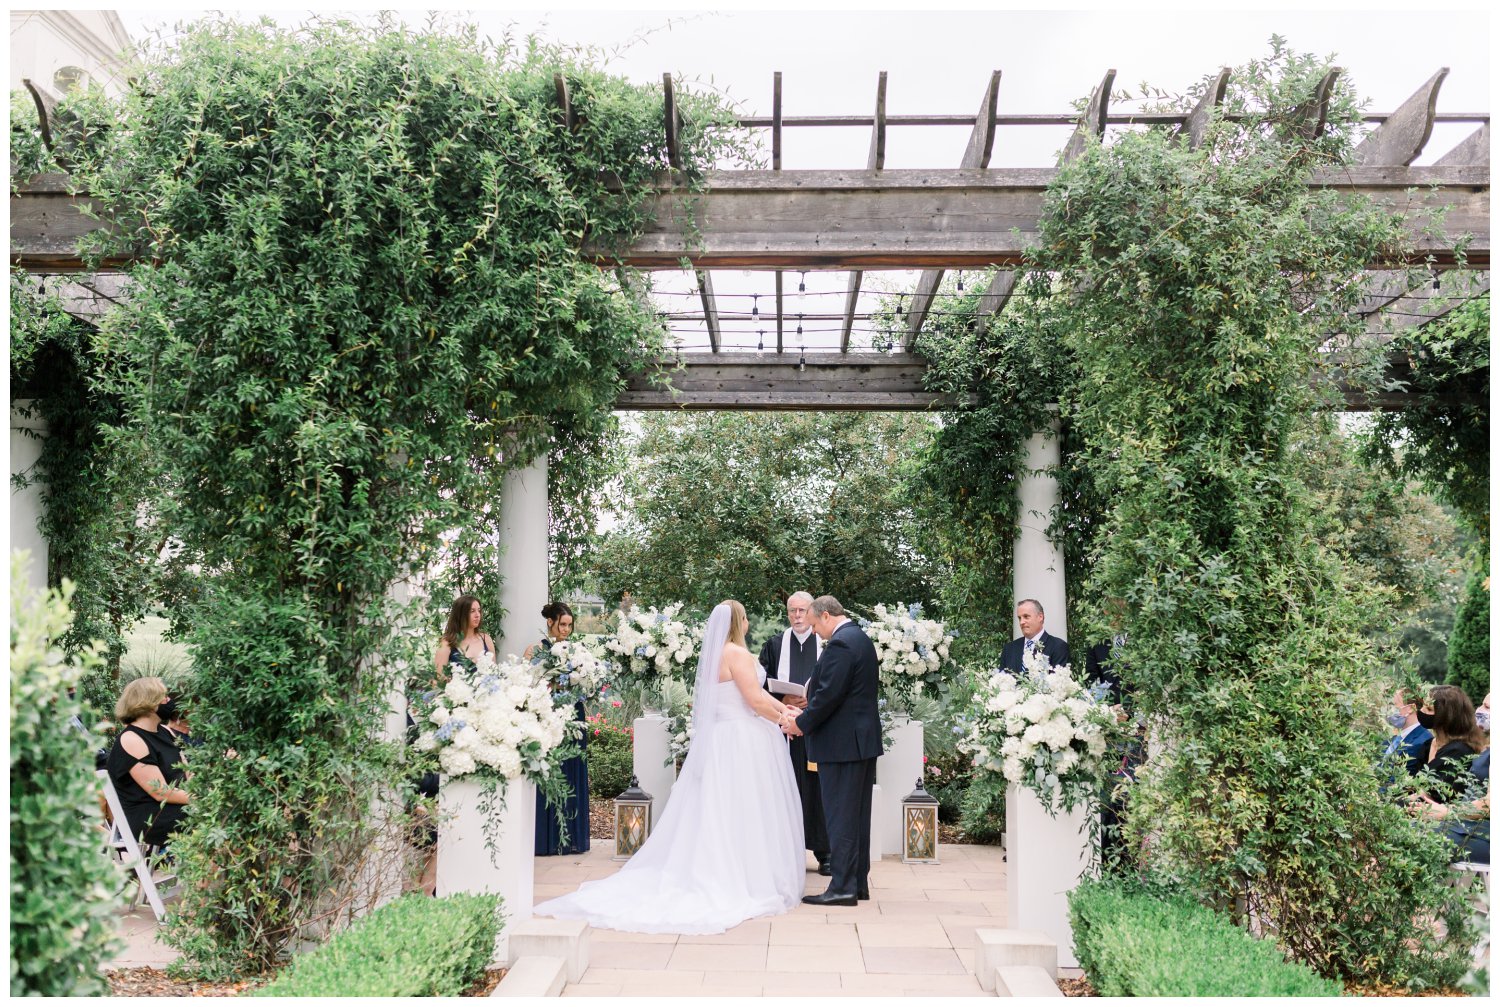  Ballantyne Hotel wedding garden inspired in Charlotte North Carolina by photographer Samantha Laffoon